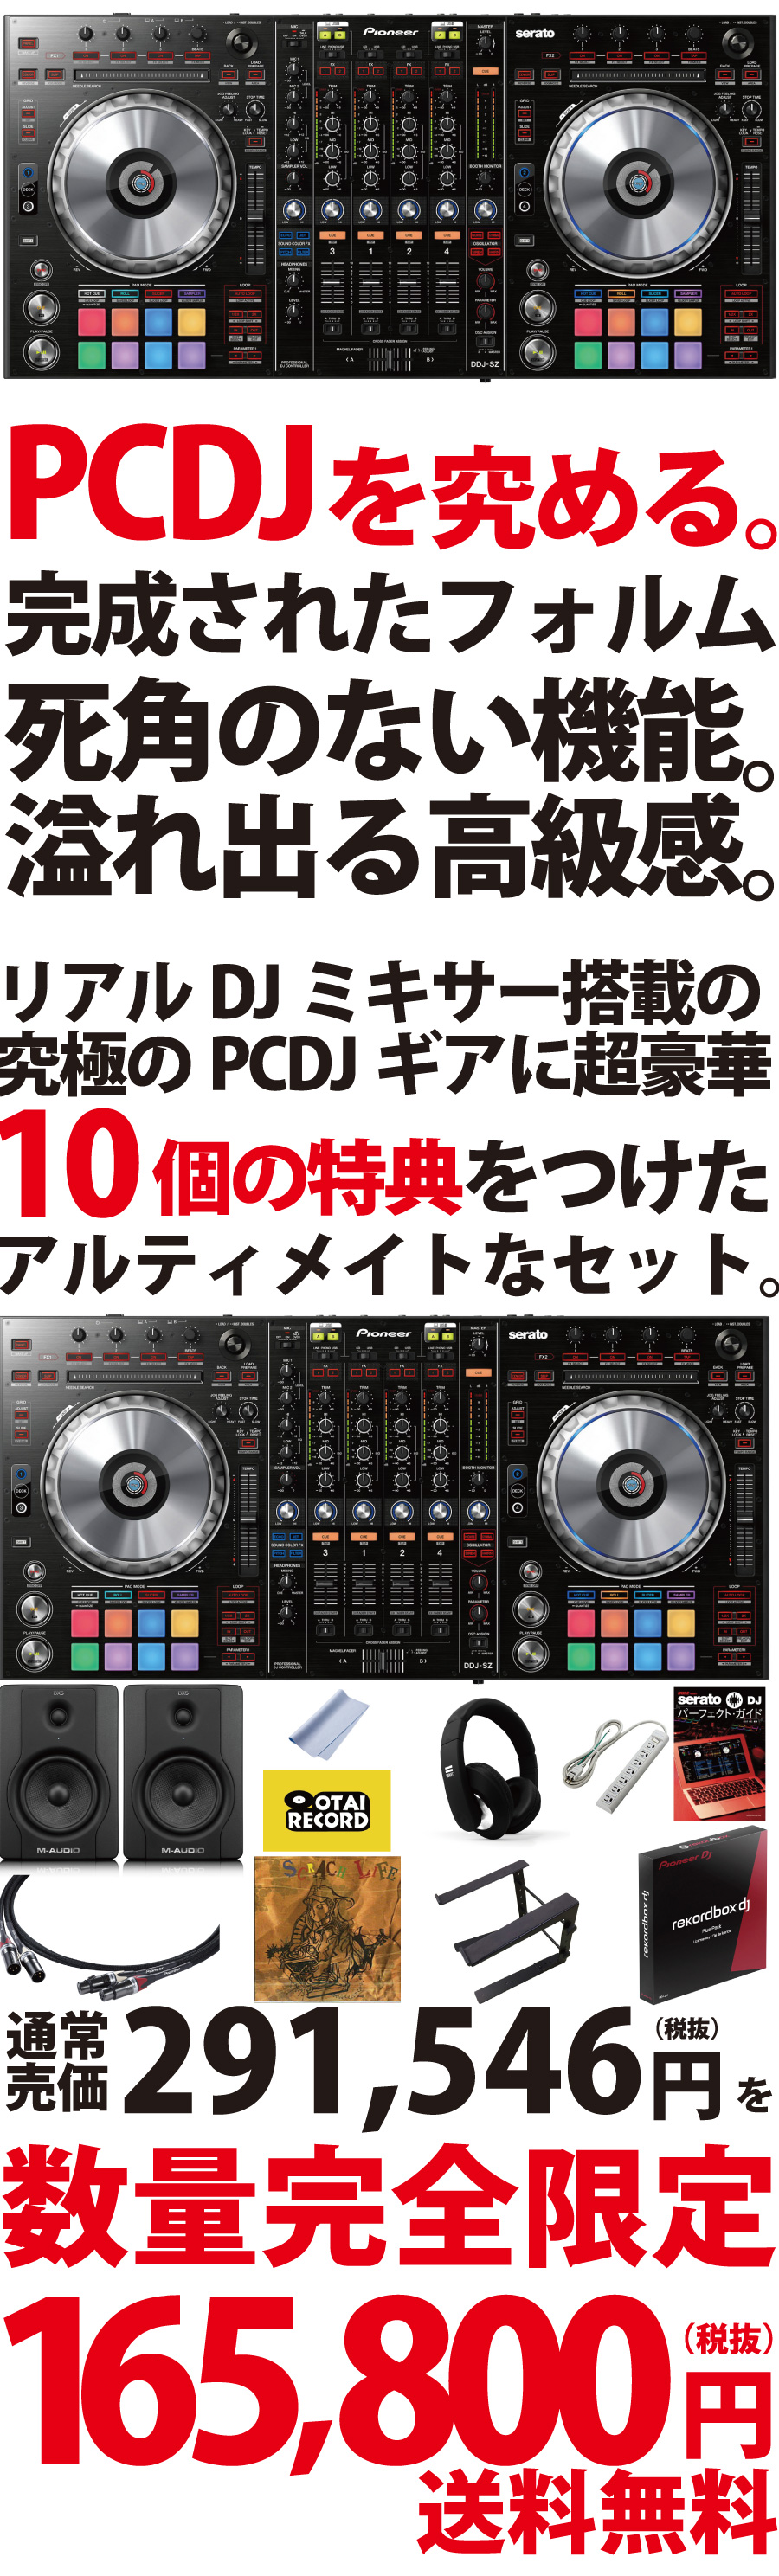 serato DJ対応最高峰PCDJコントローラー】Pioneer DJ「DDJ-SZ」10大 